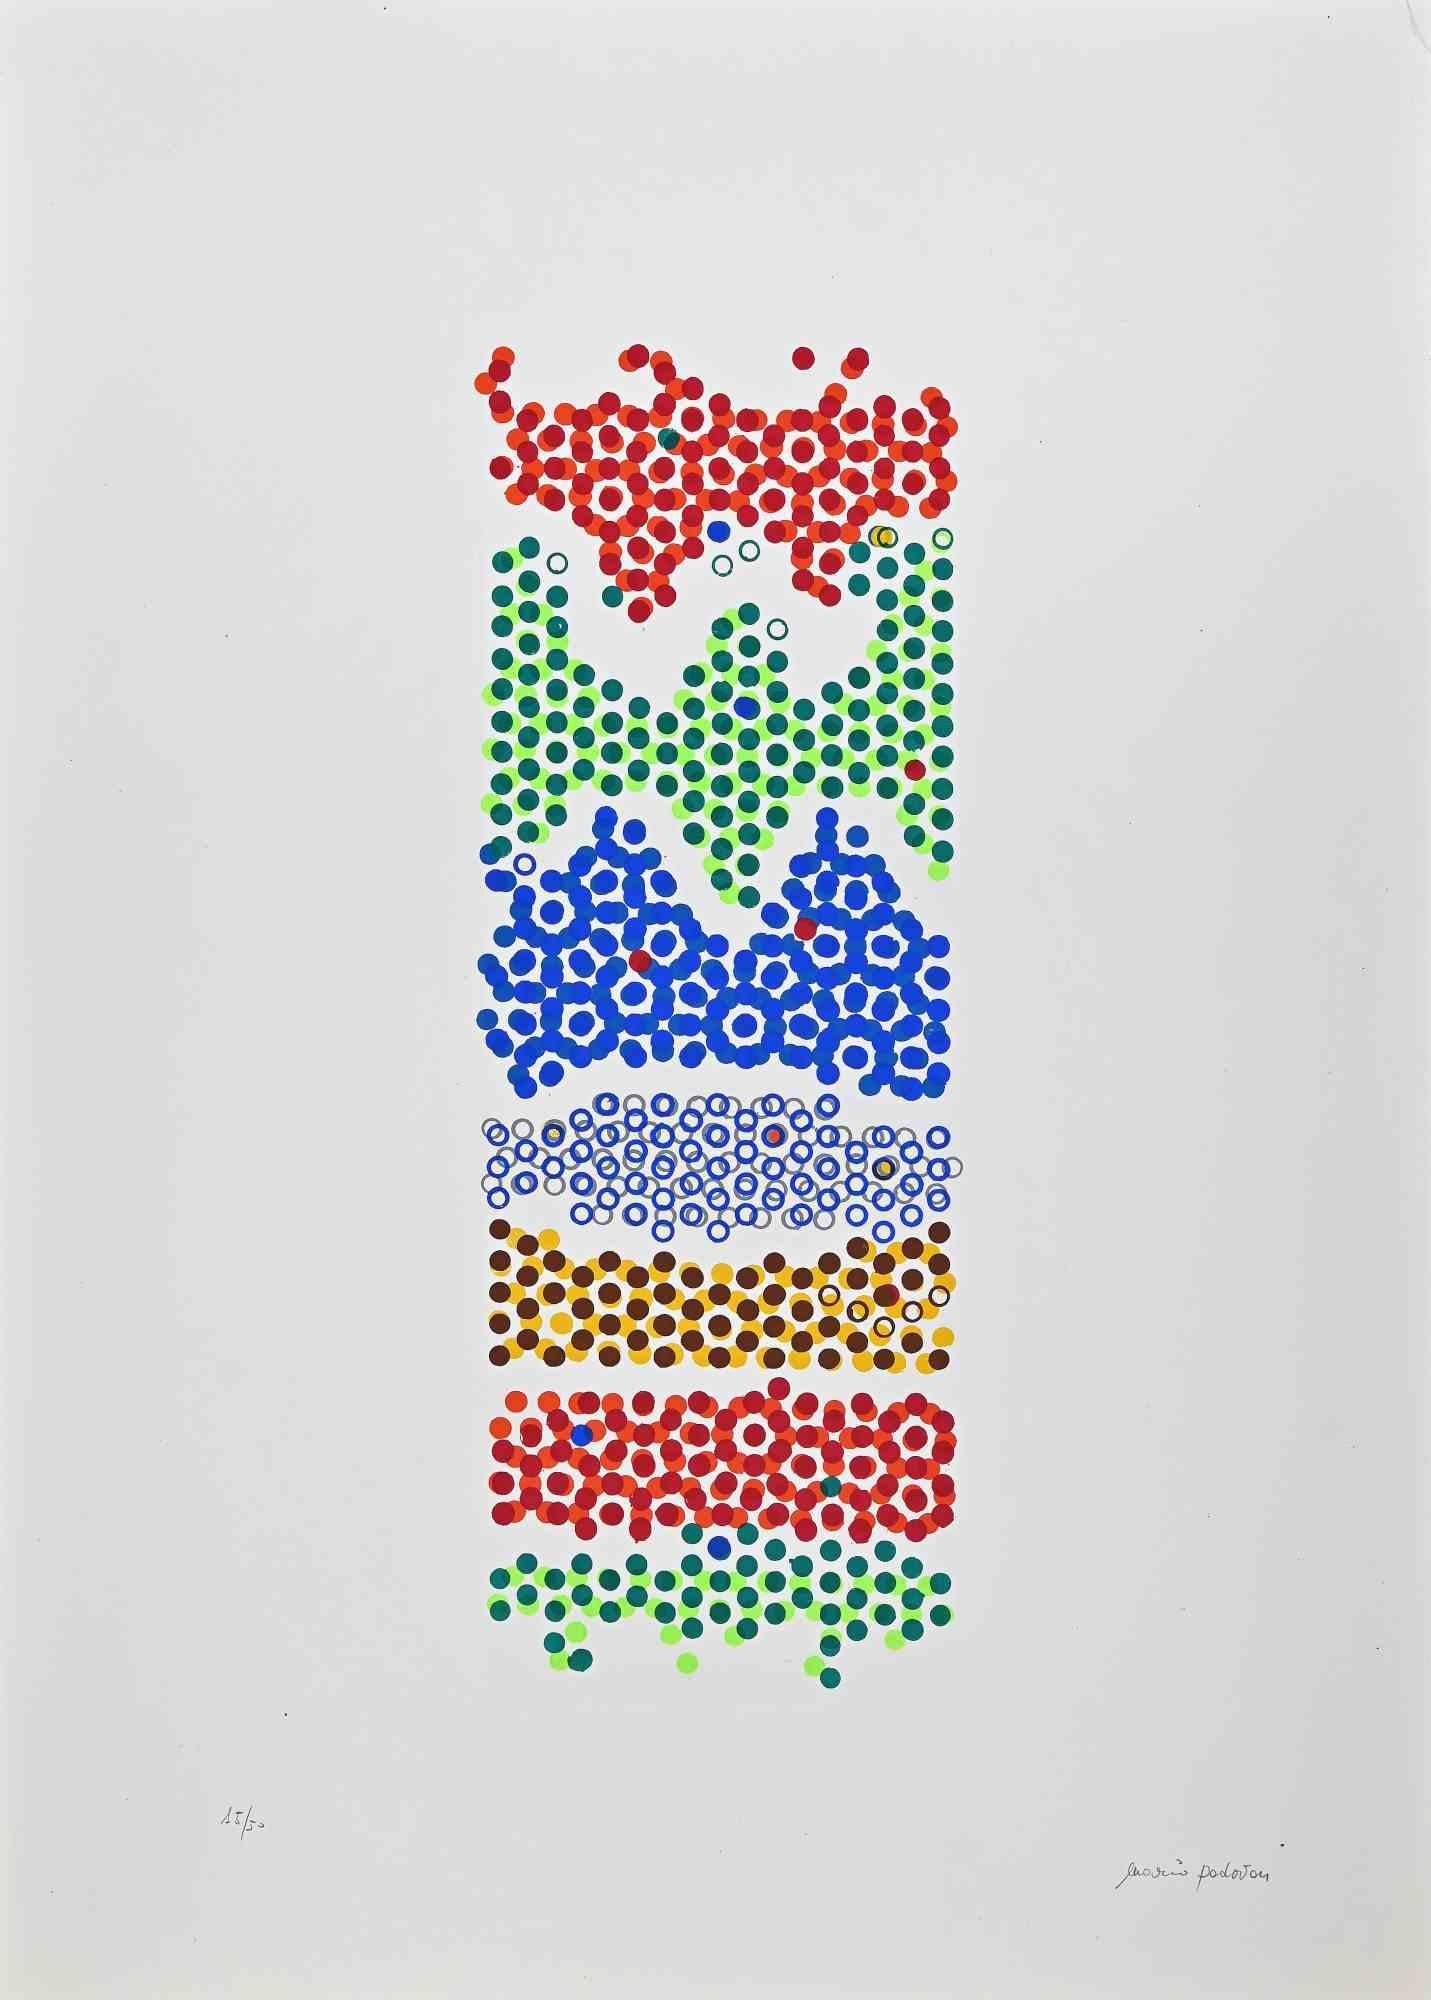 Colourful Illusion - Screen Print by Mario Padovan - 1971